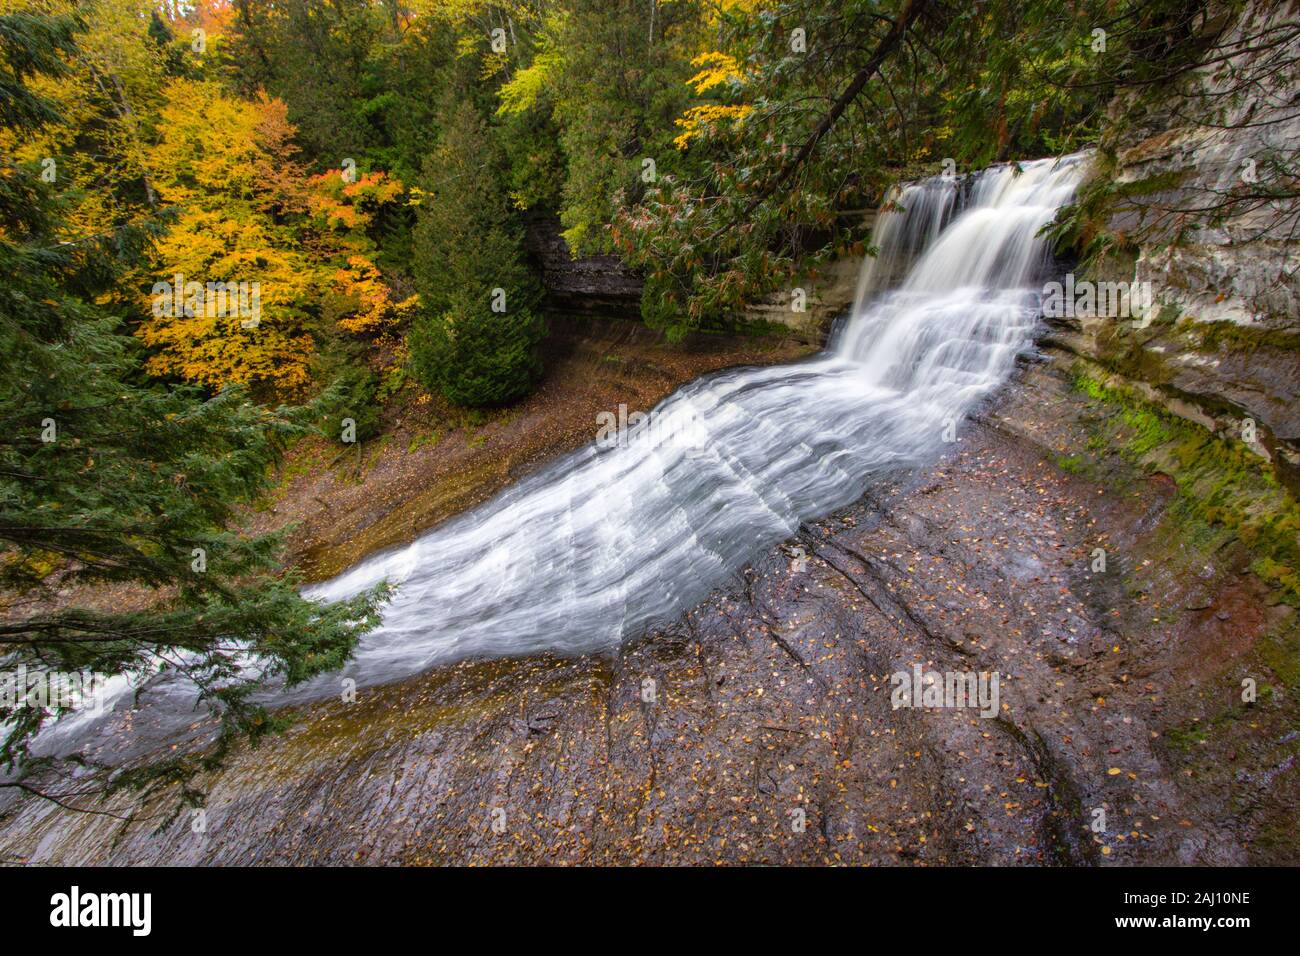 Otoño Cascada de Michigan. Laughing Whitefish Falls lugar pintoresco rodeado de follaje de otoño en la Península Superior de Michigan. Foto de stock